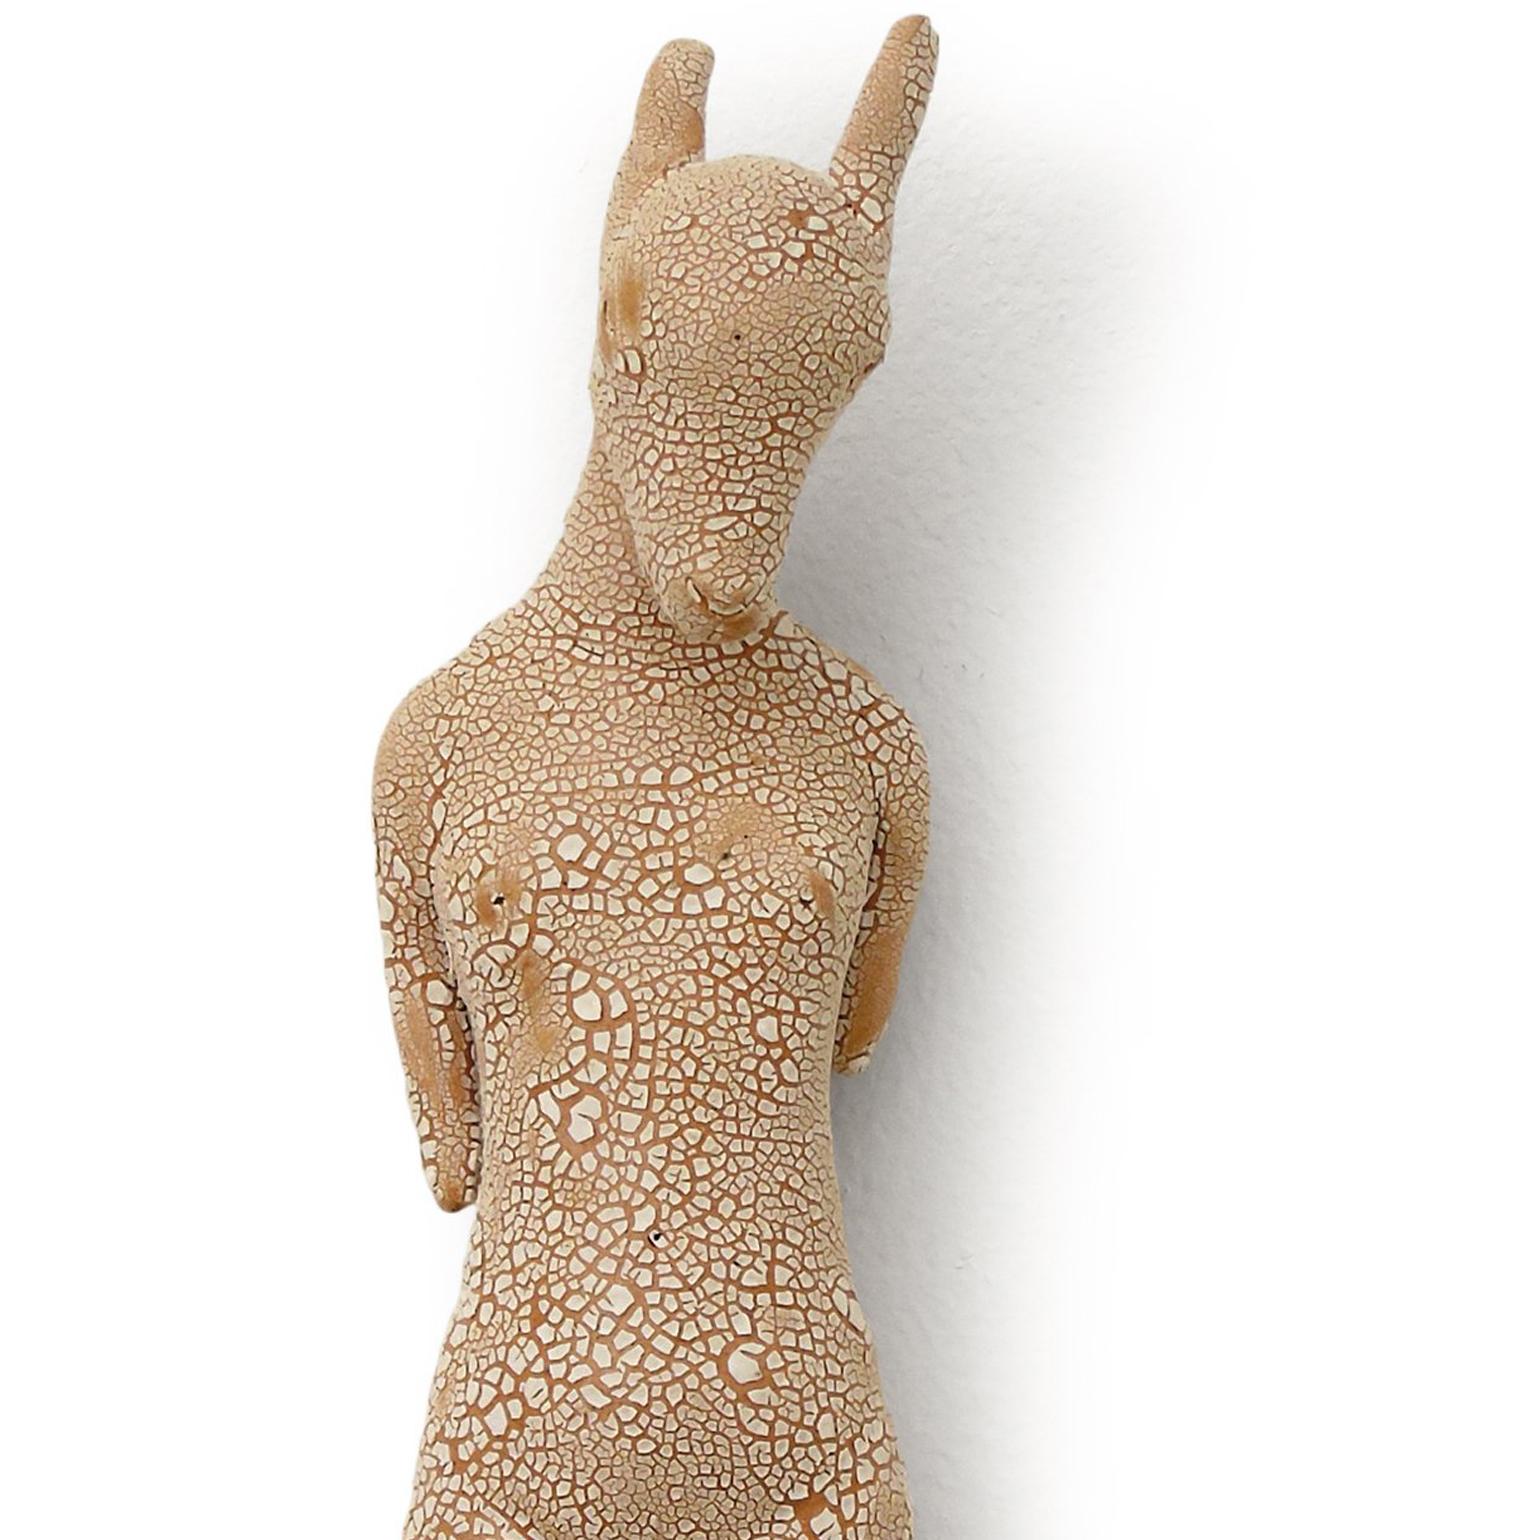 Goat Lady - Beige Figurative Sculpture by Robin Whiteman